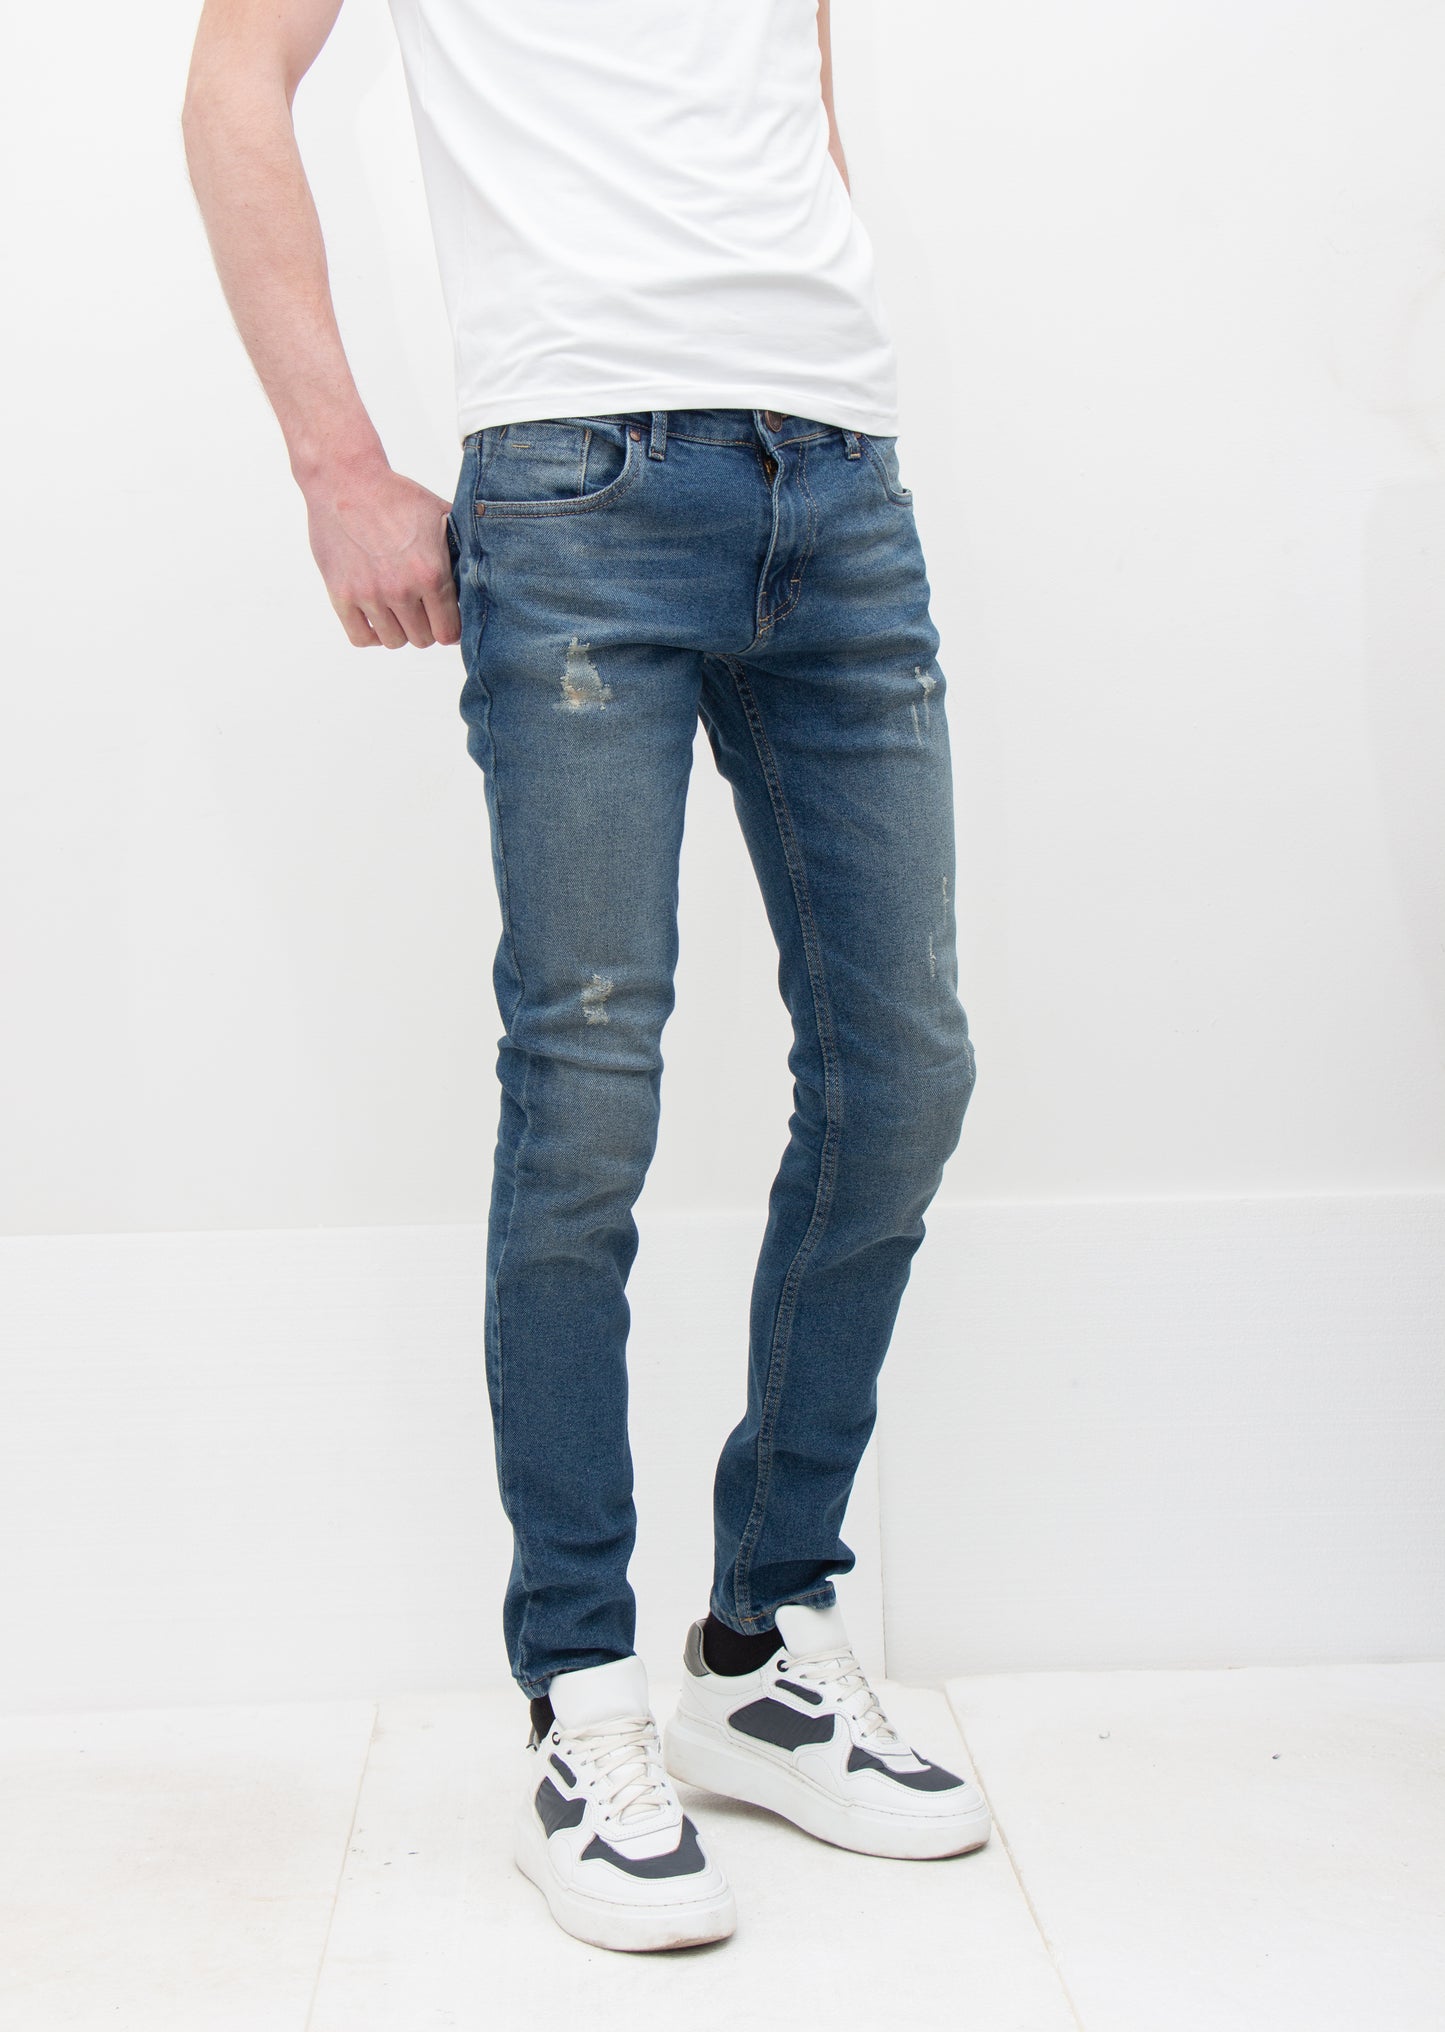 Birmingham Jeans